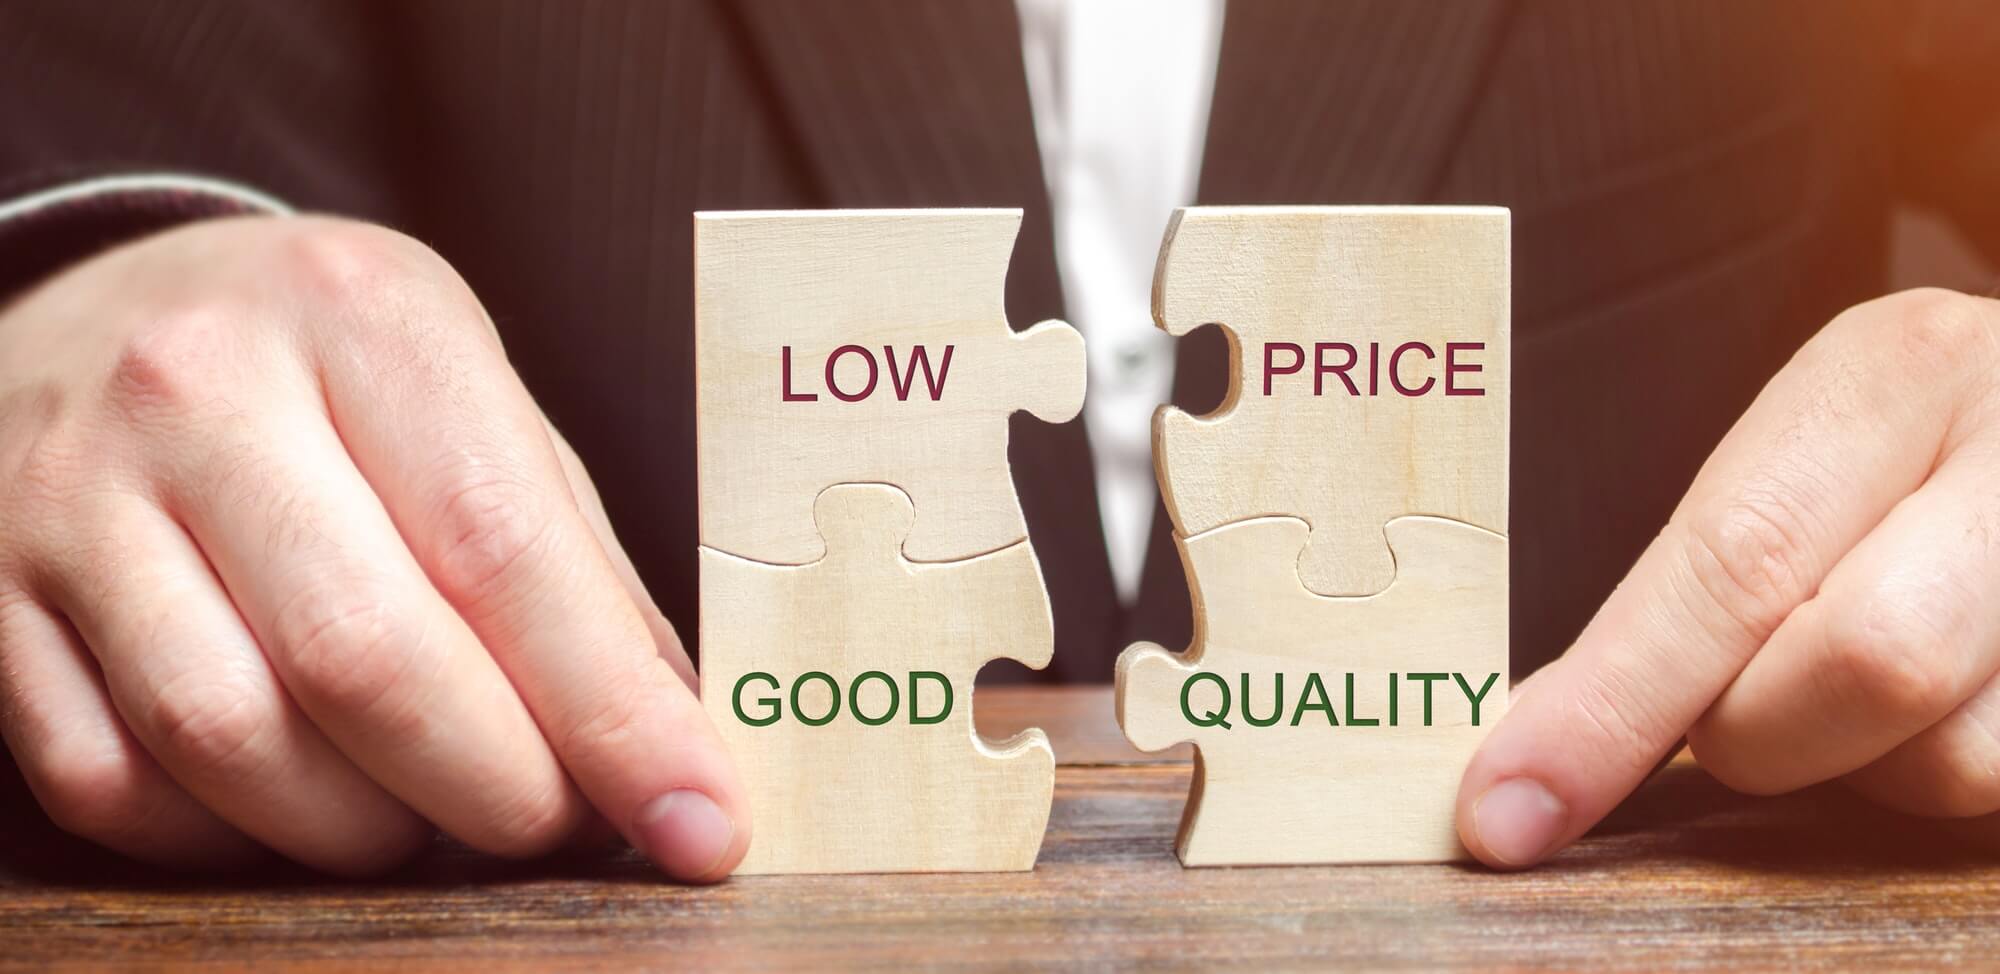 Executive Car & Limousines: Price vs. Quality